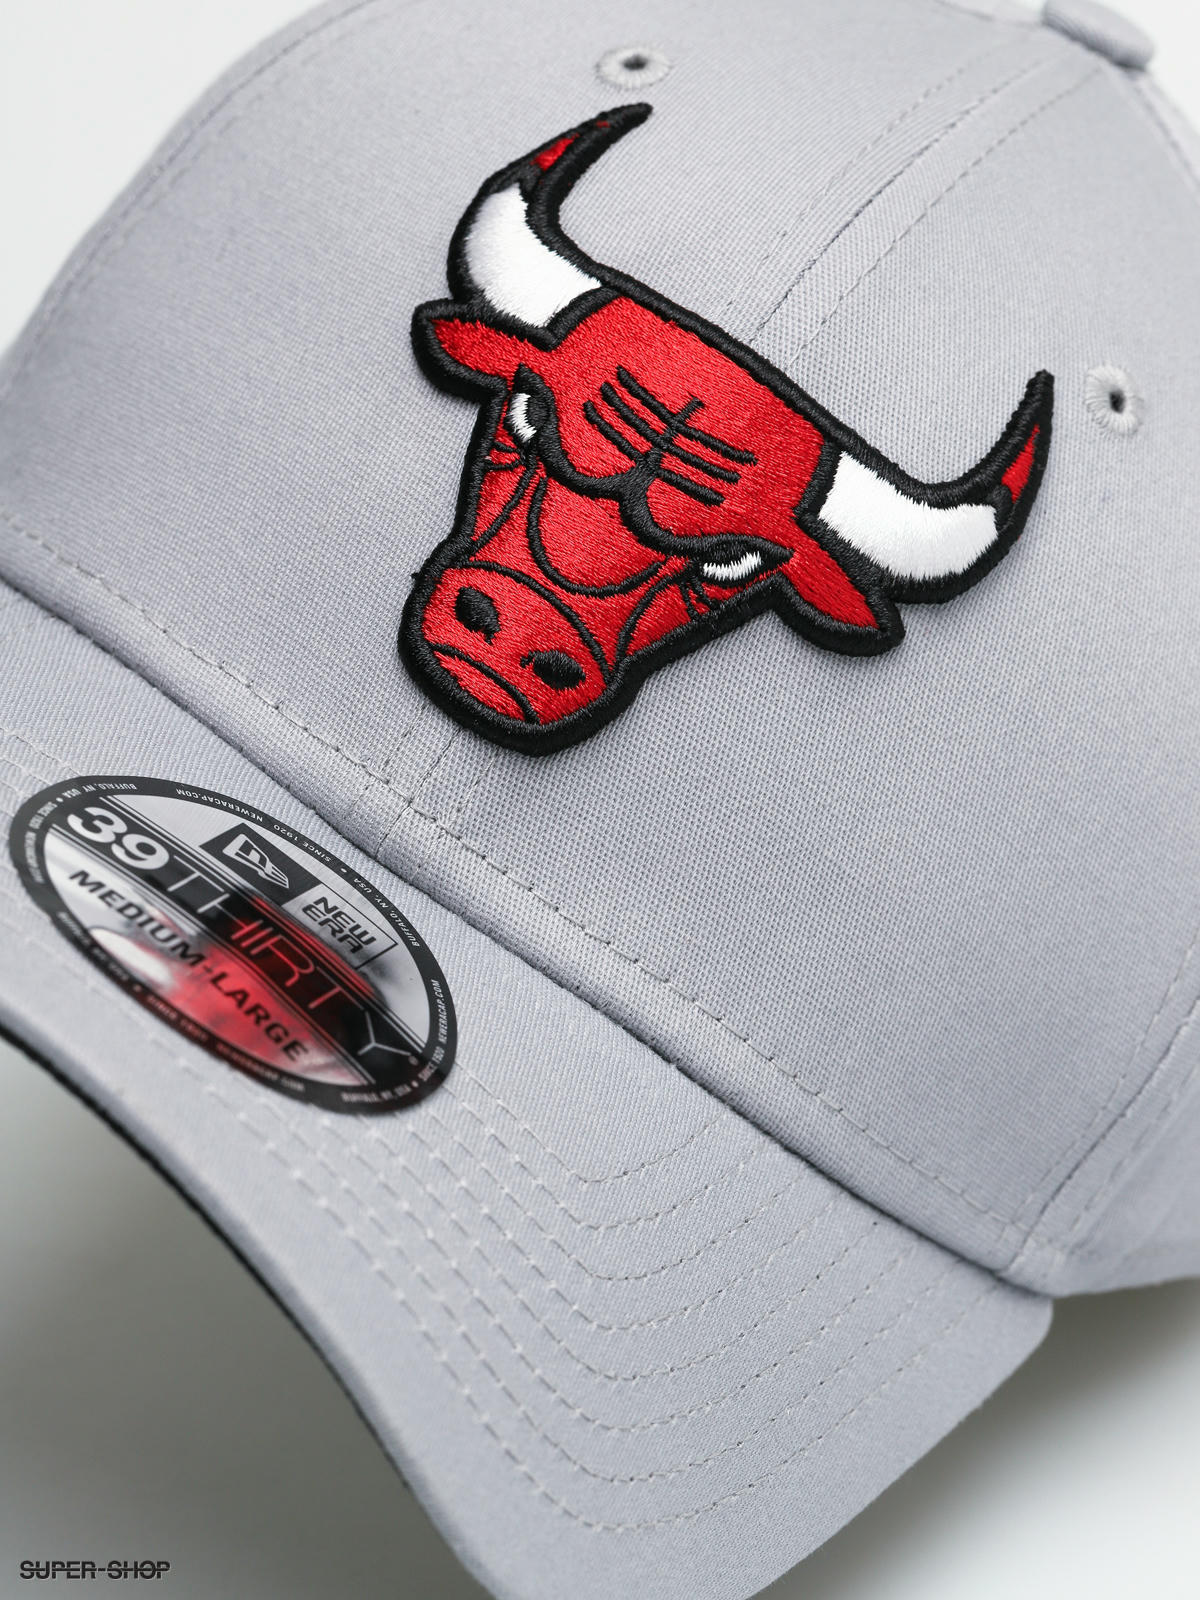 39Thirty NBA Team Bulls Cap by New Era